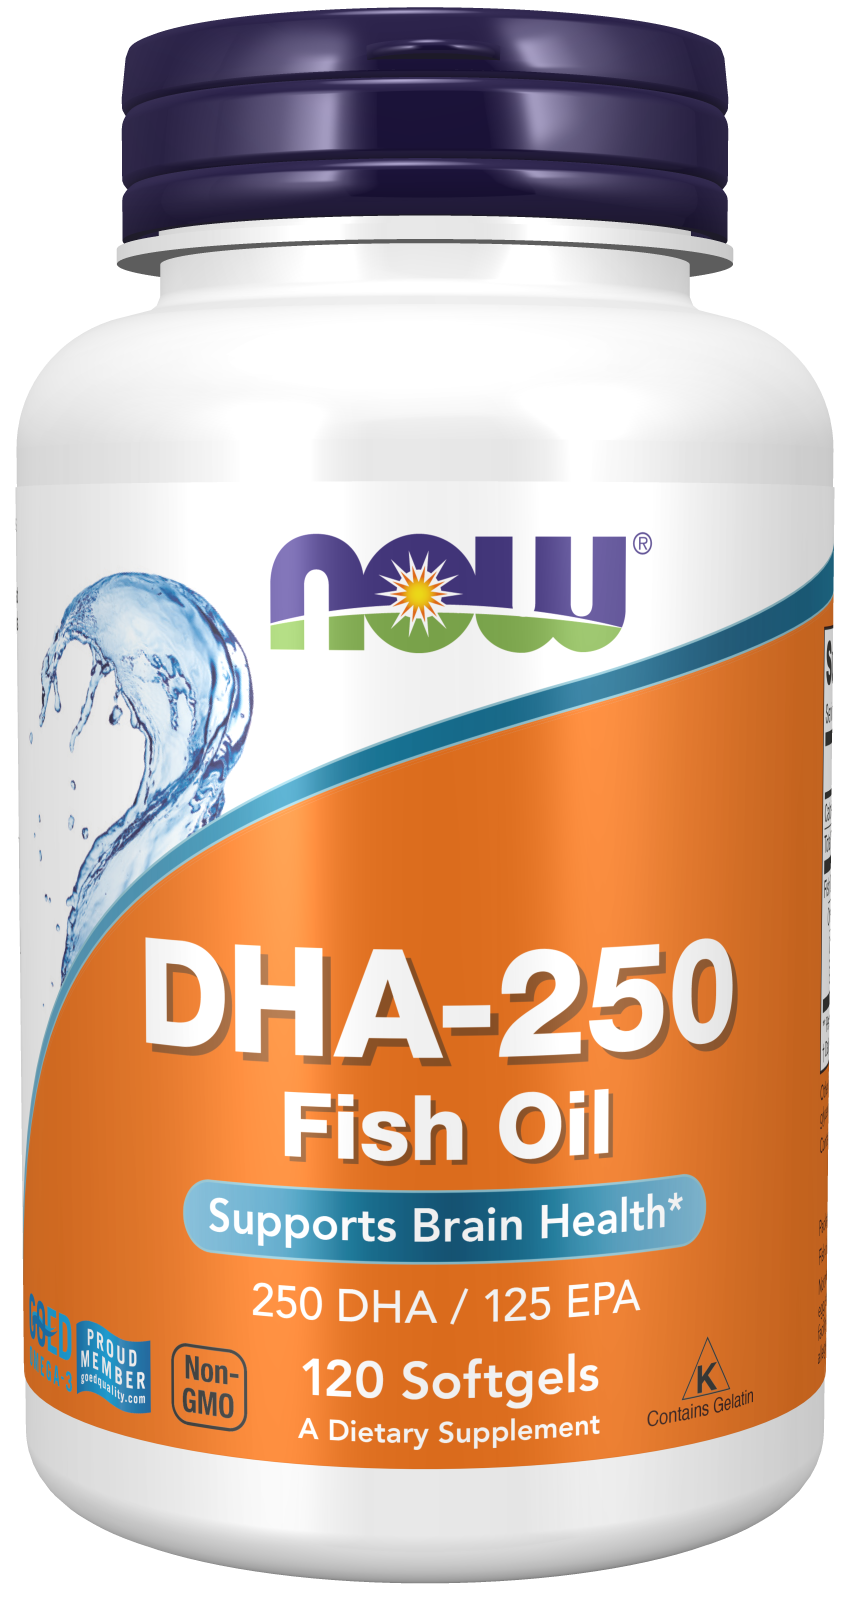 DHA-250 - 120 Softgels Bottle Right